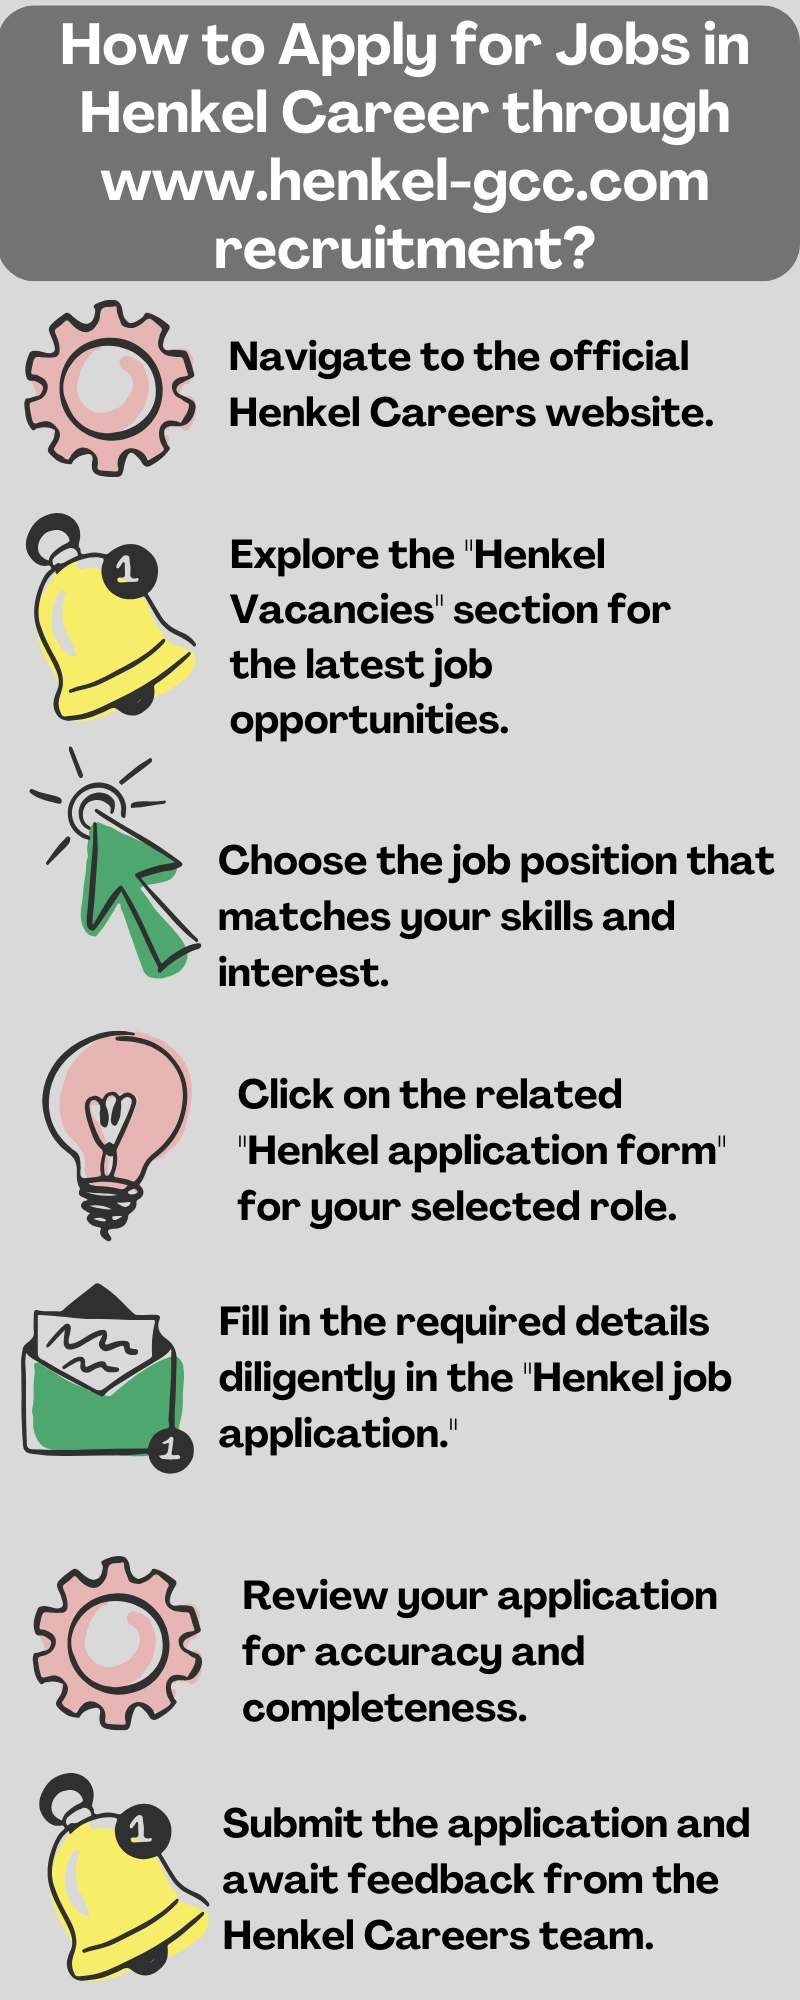 How to Apply for Jobs in Henkel Career through www.henkel-gcc.com recruitment?